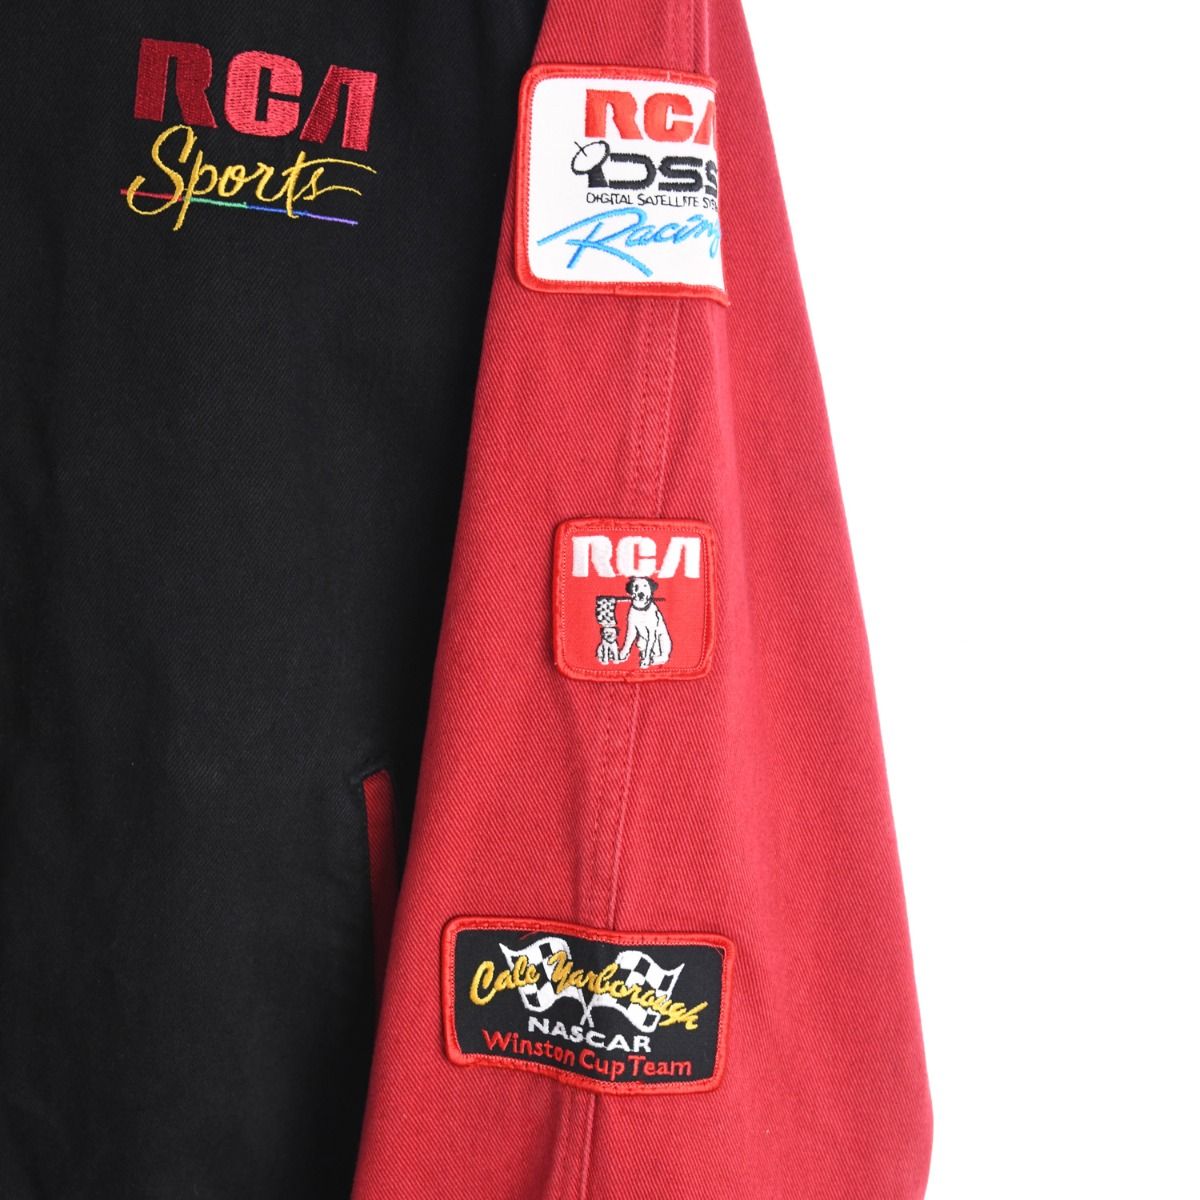 RCA Records 1990s Racing Jacket